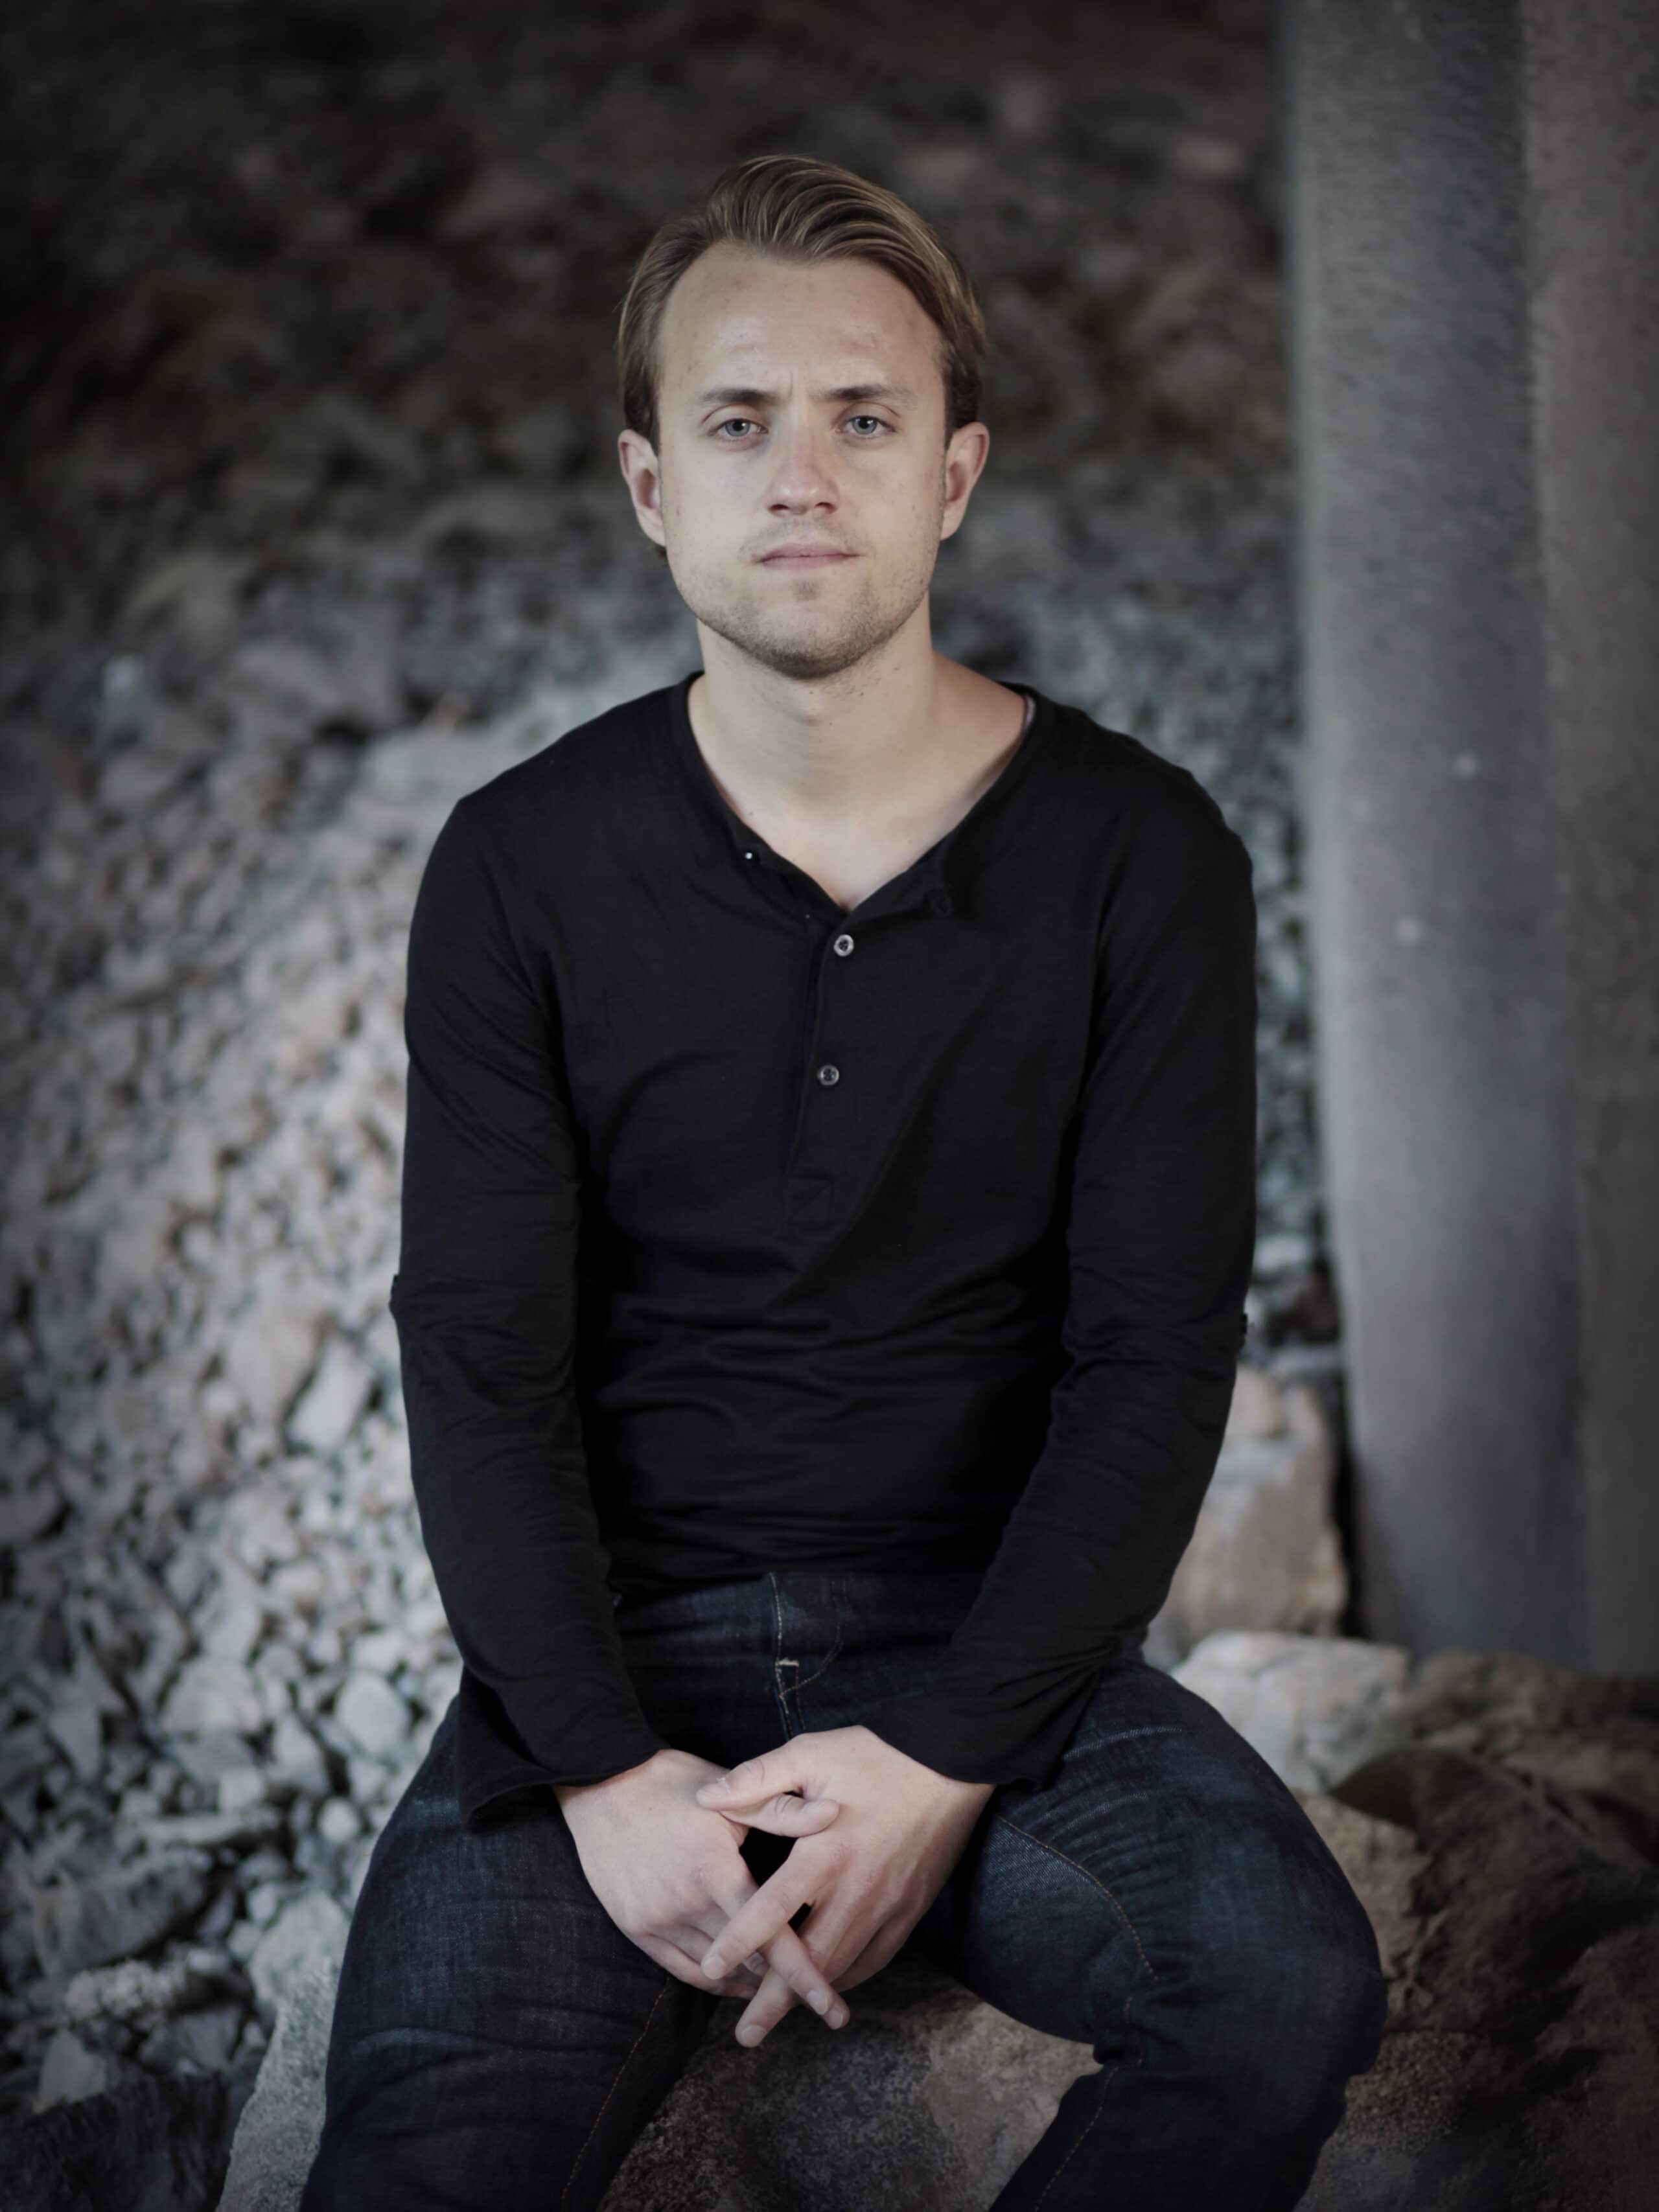 Årets folkbildare 2019, Christian Dahlström